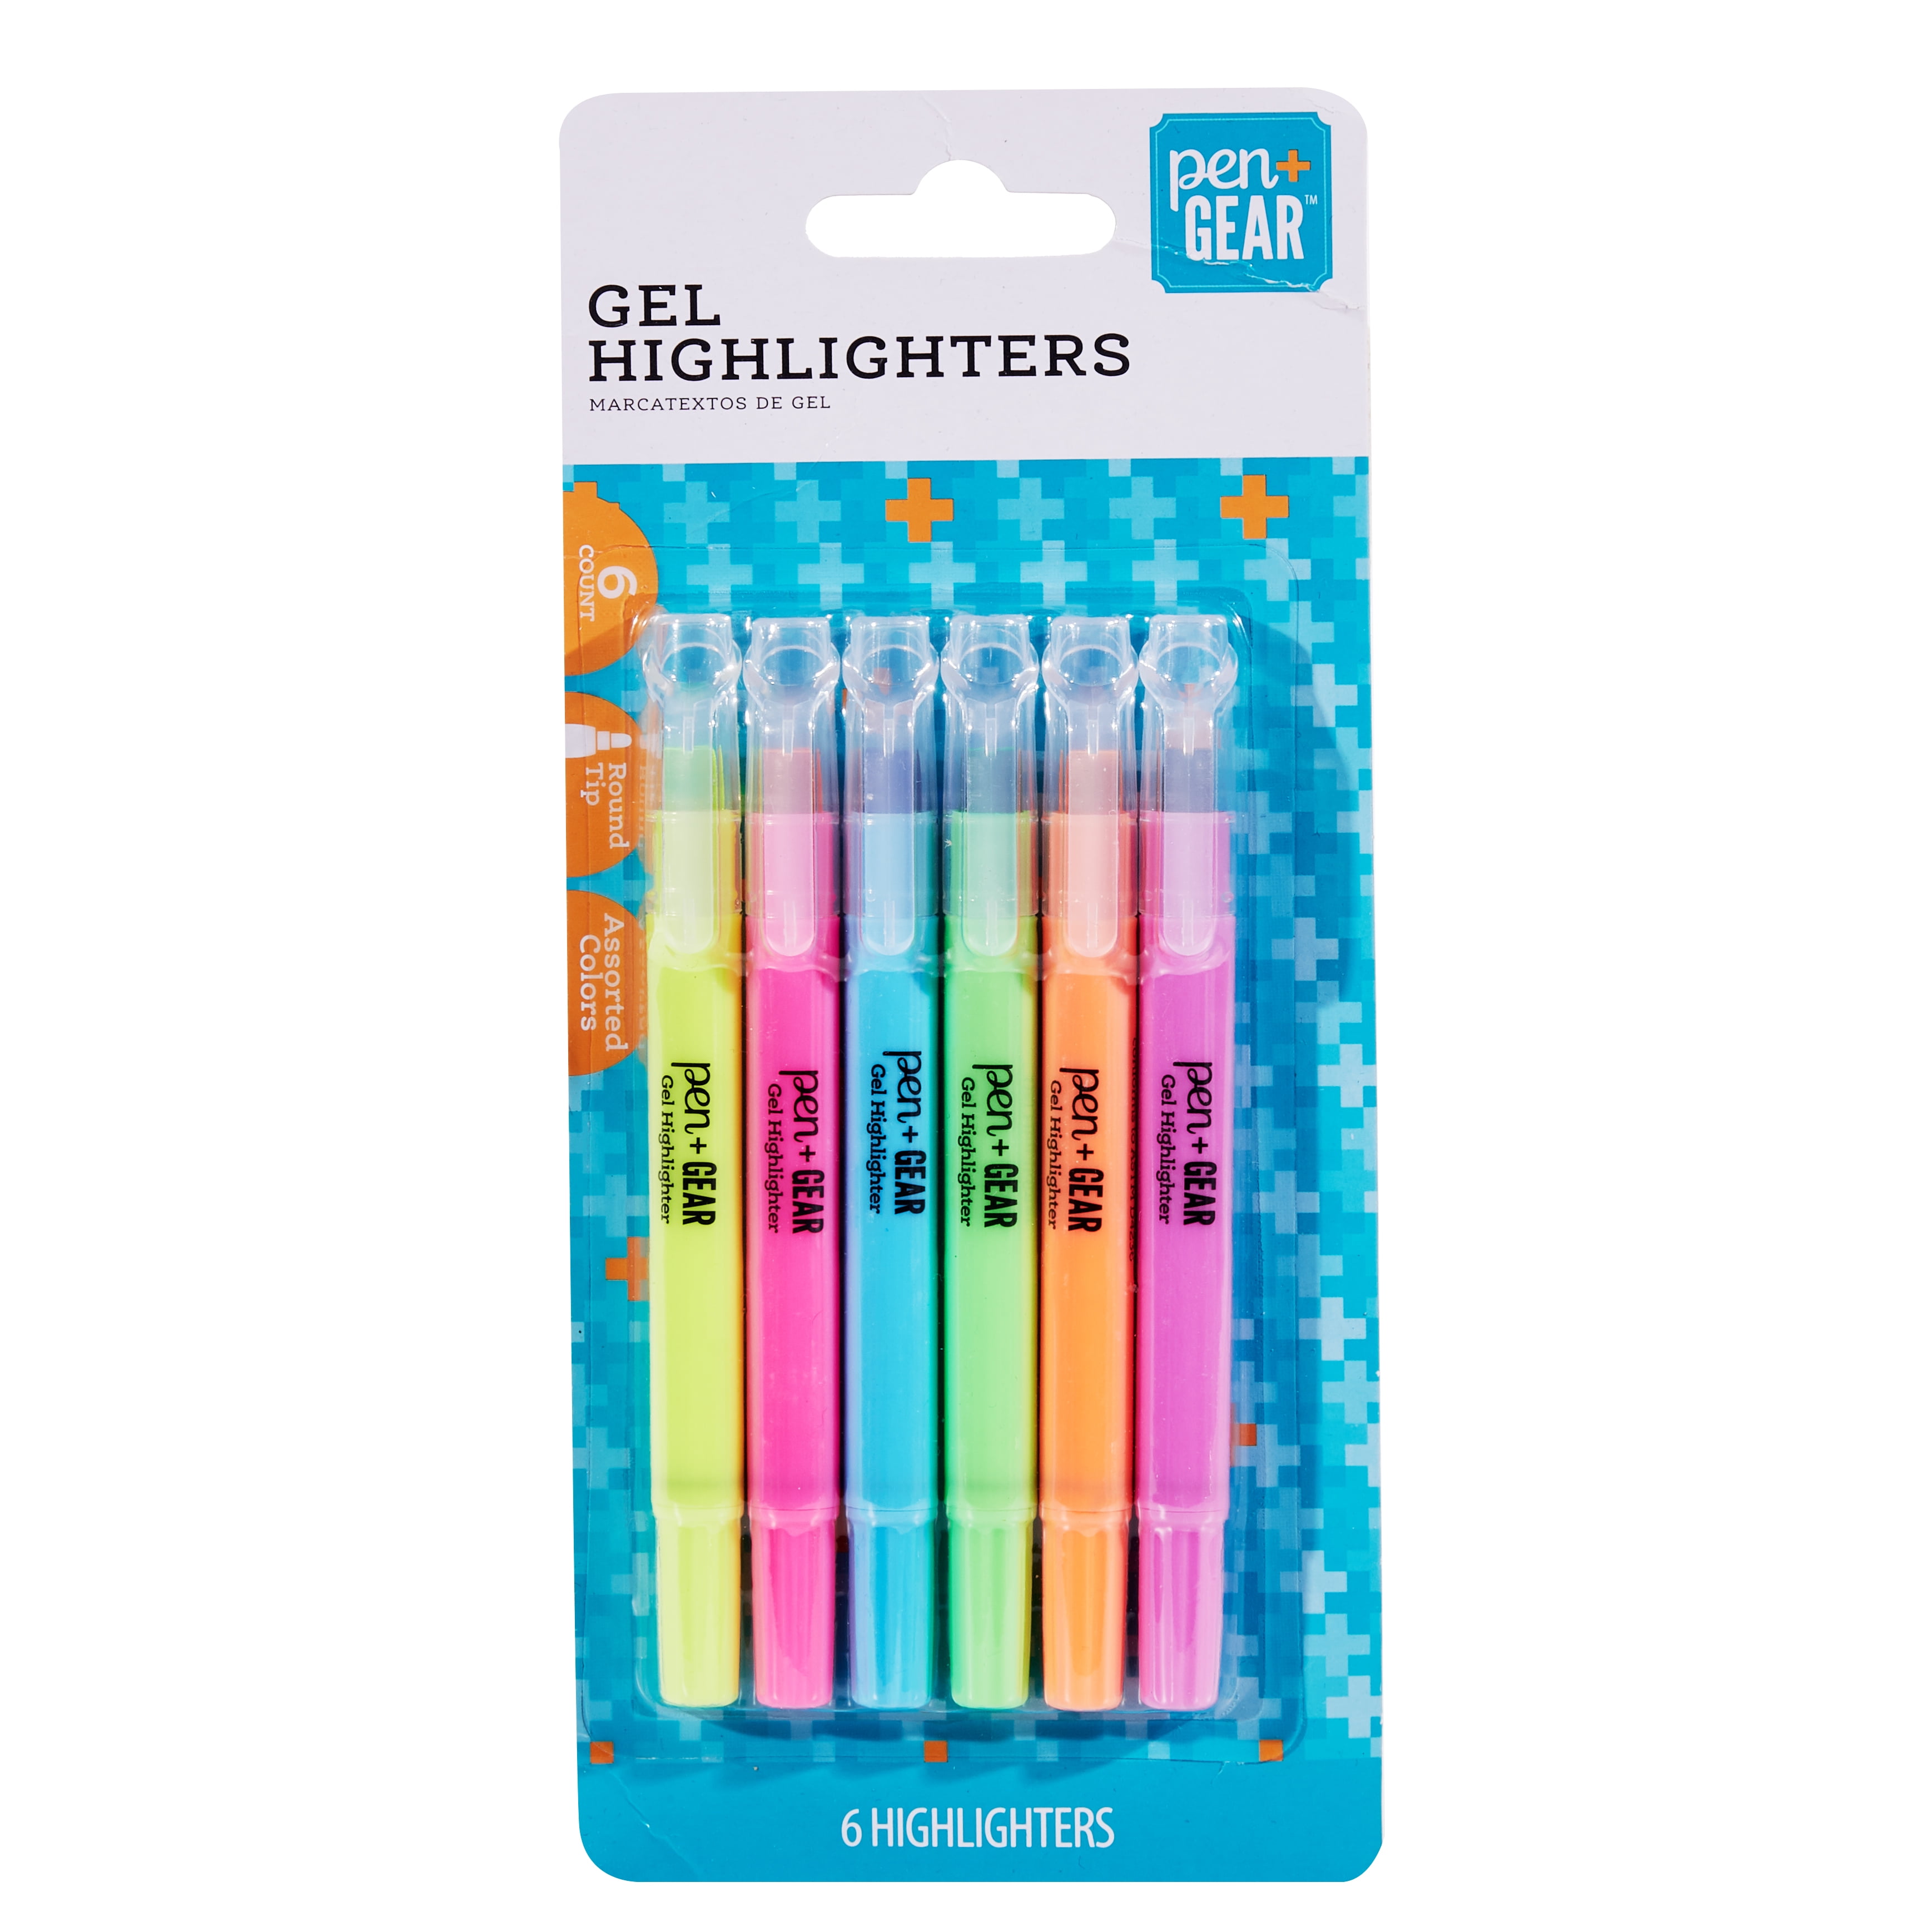 Creative Highlighters Gel Pen School Office Supplies Gift NEW Cute  Fast.